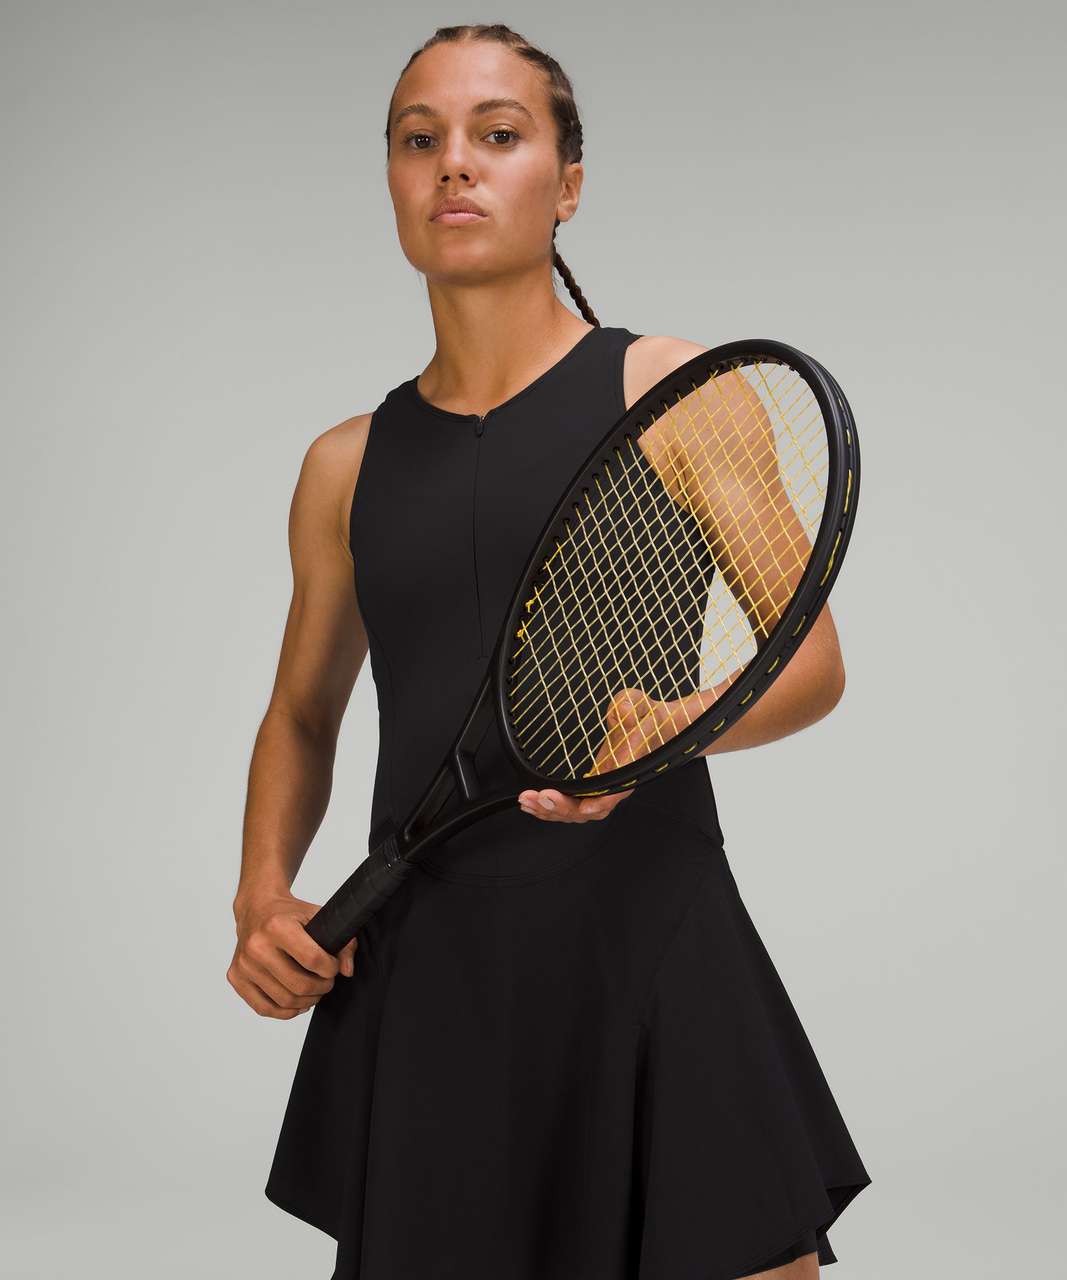 Lululemon Everlux Short-Lined Tennis Tank Top Dress 8" - Black